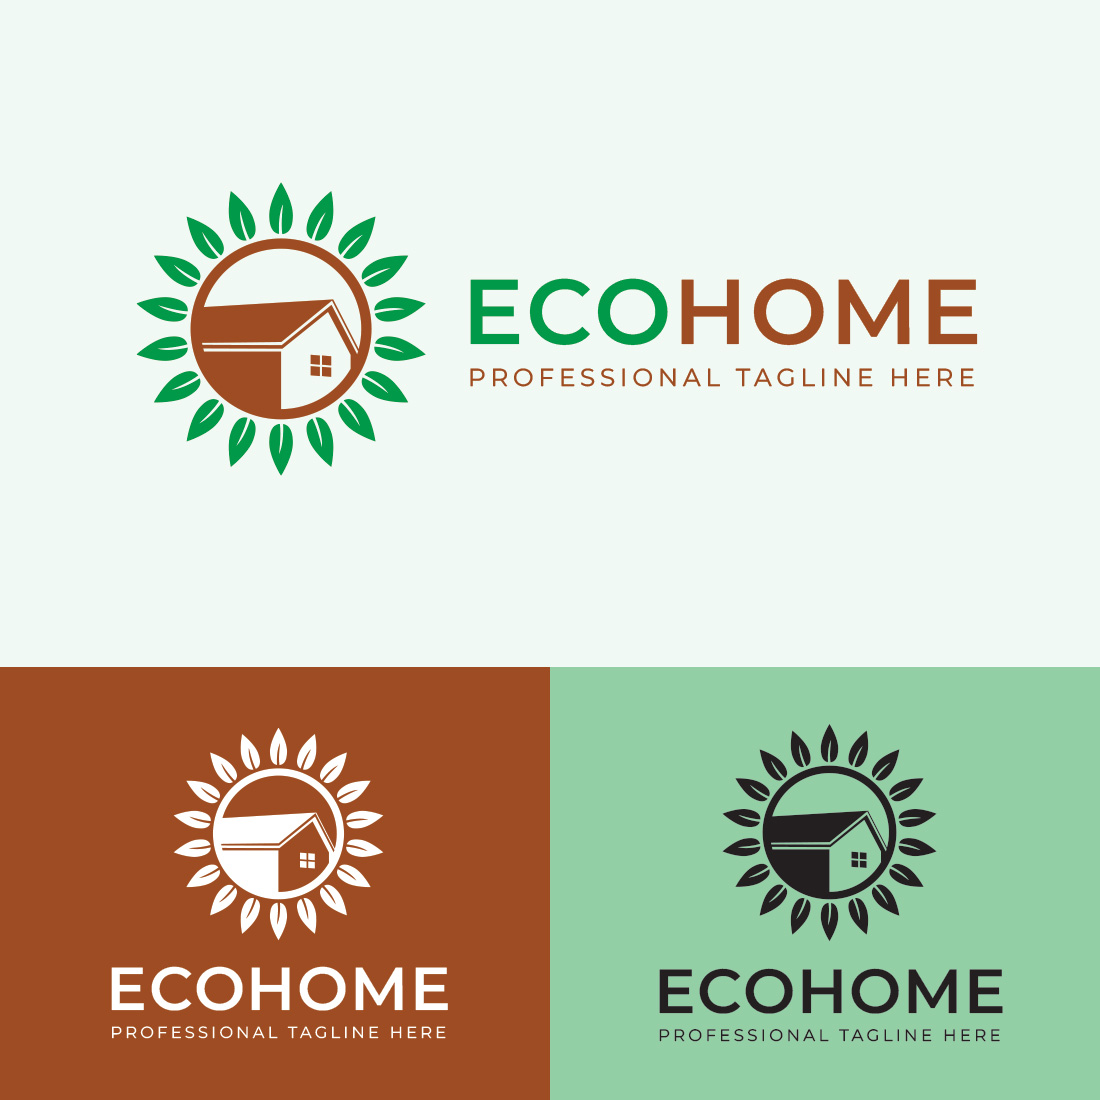 Modern Eco Home Logo Design Template cover image.